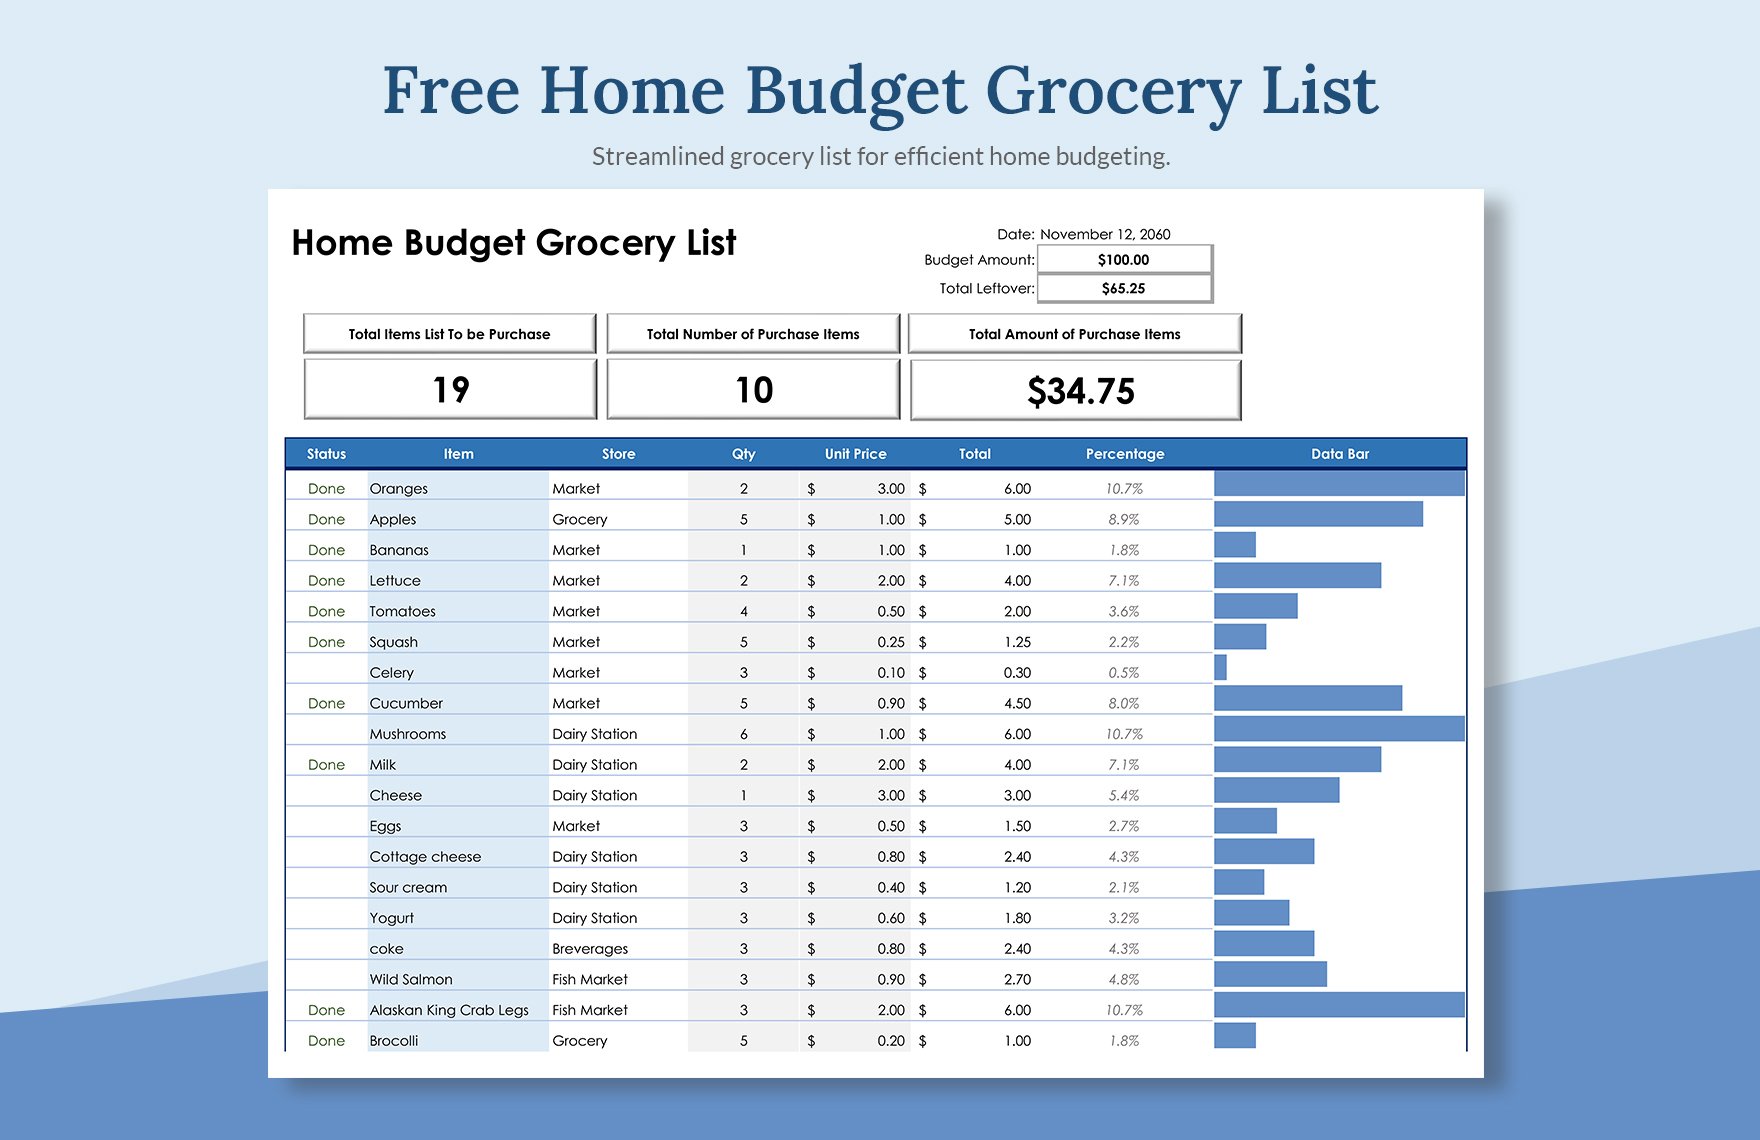 Home Budget Grocery List